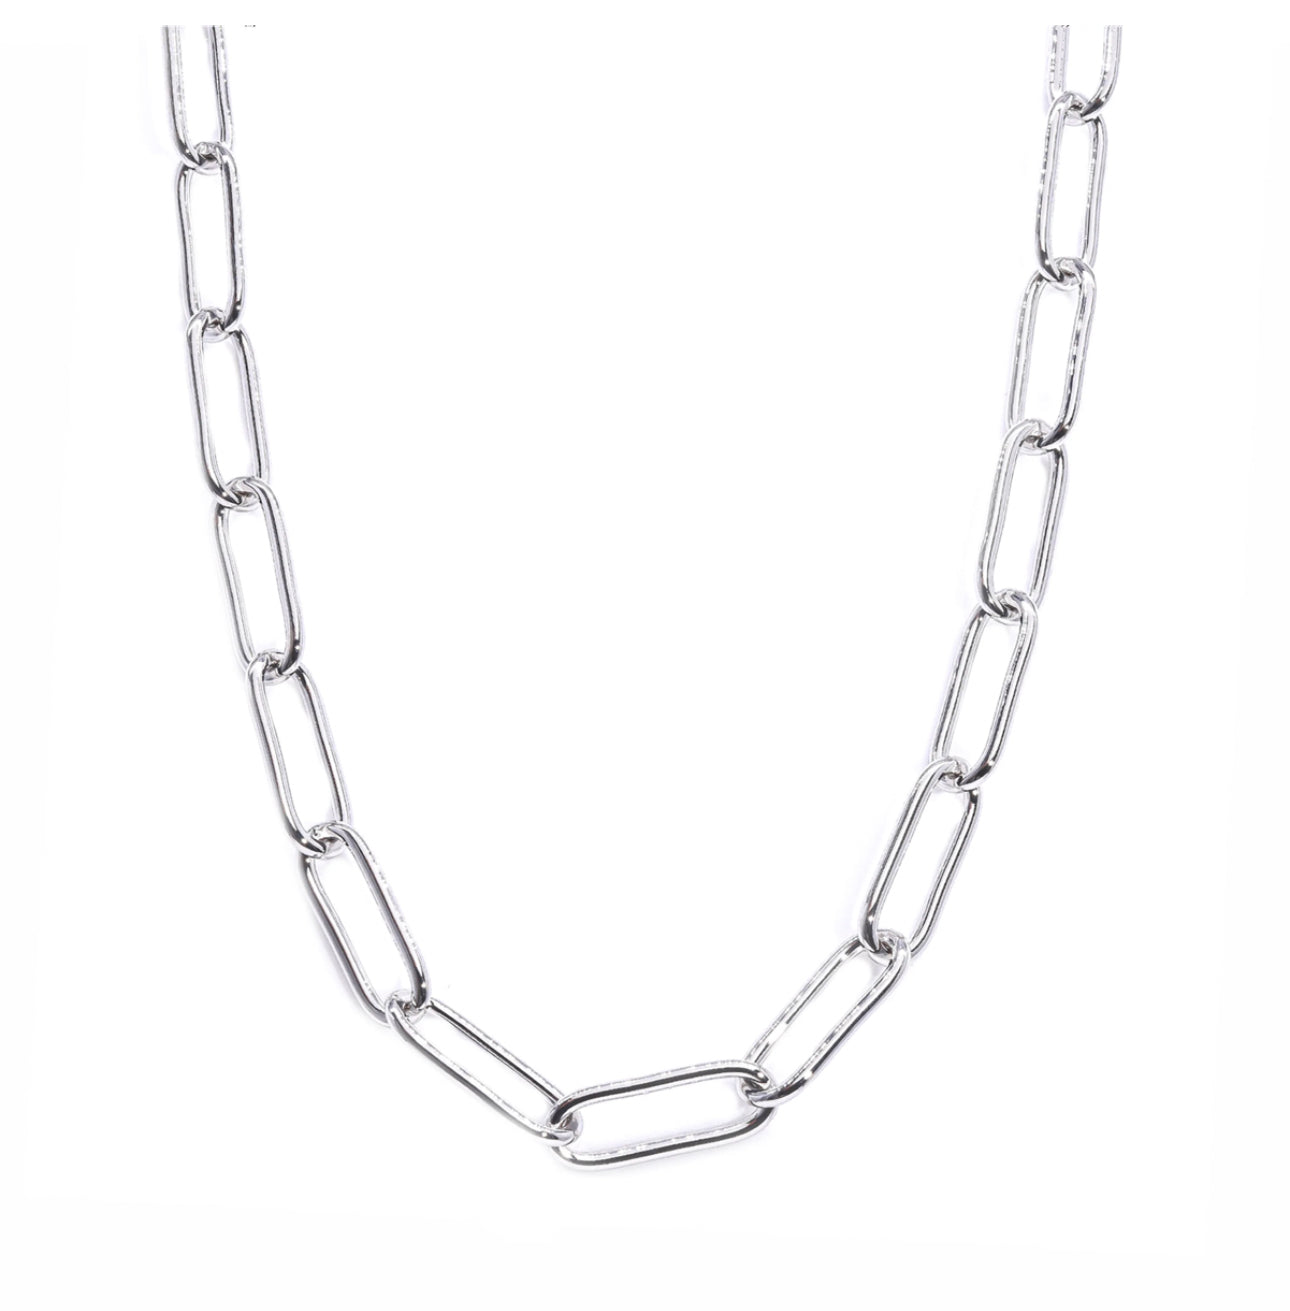 eLiasz & eLLa / Connection Paperclip Chain Necklace Gold & Silver